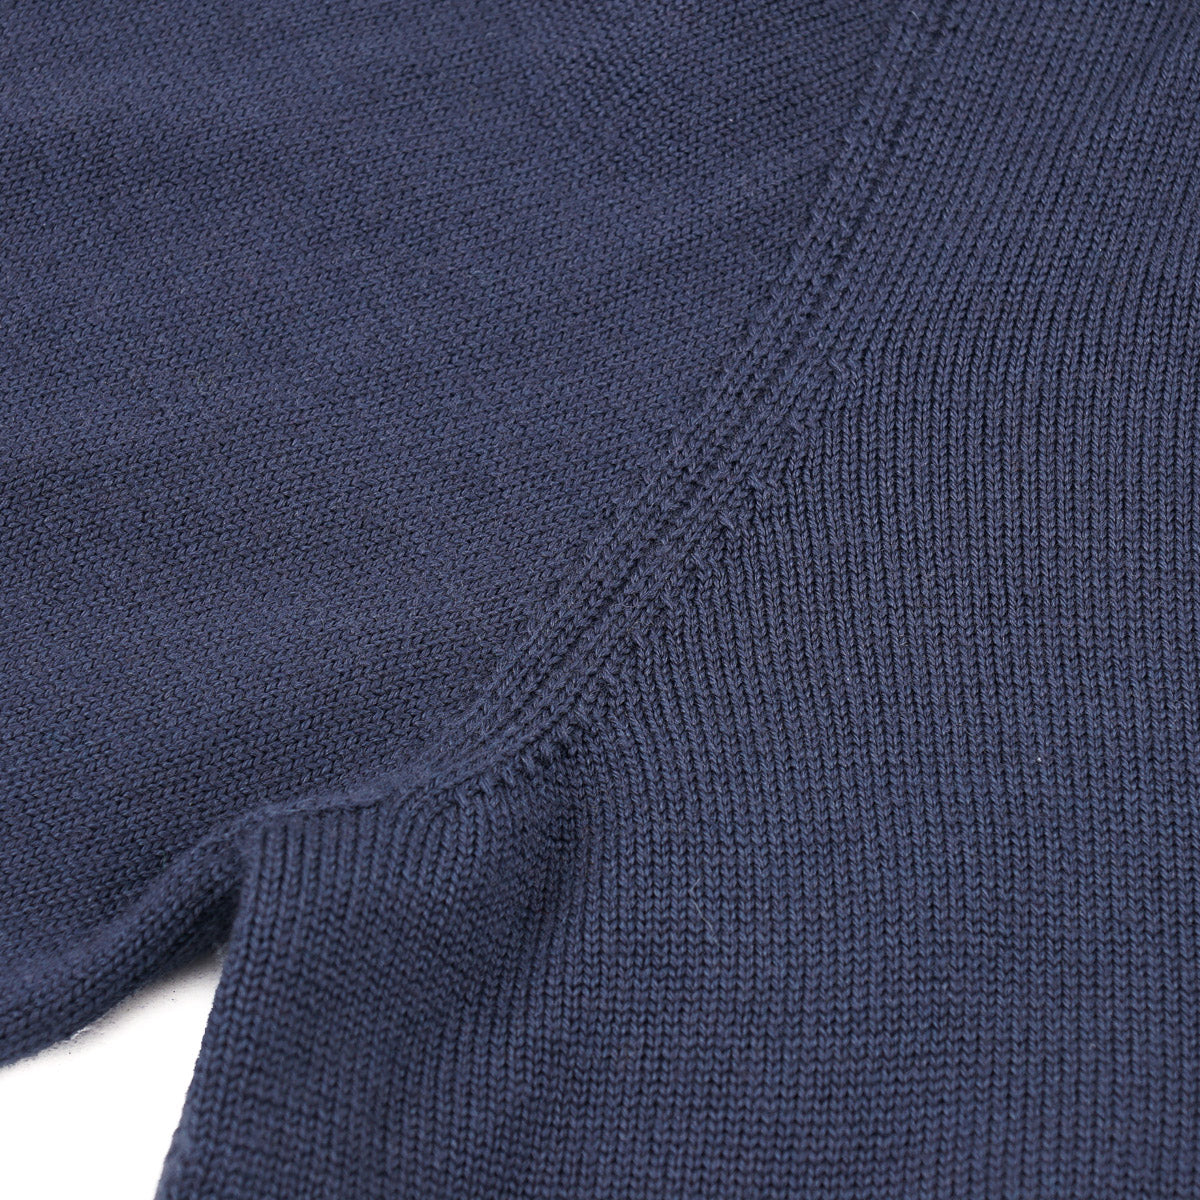 Drumohr Merino Wool Cardigan Sweater - Top Shelf Apparel